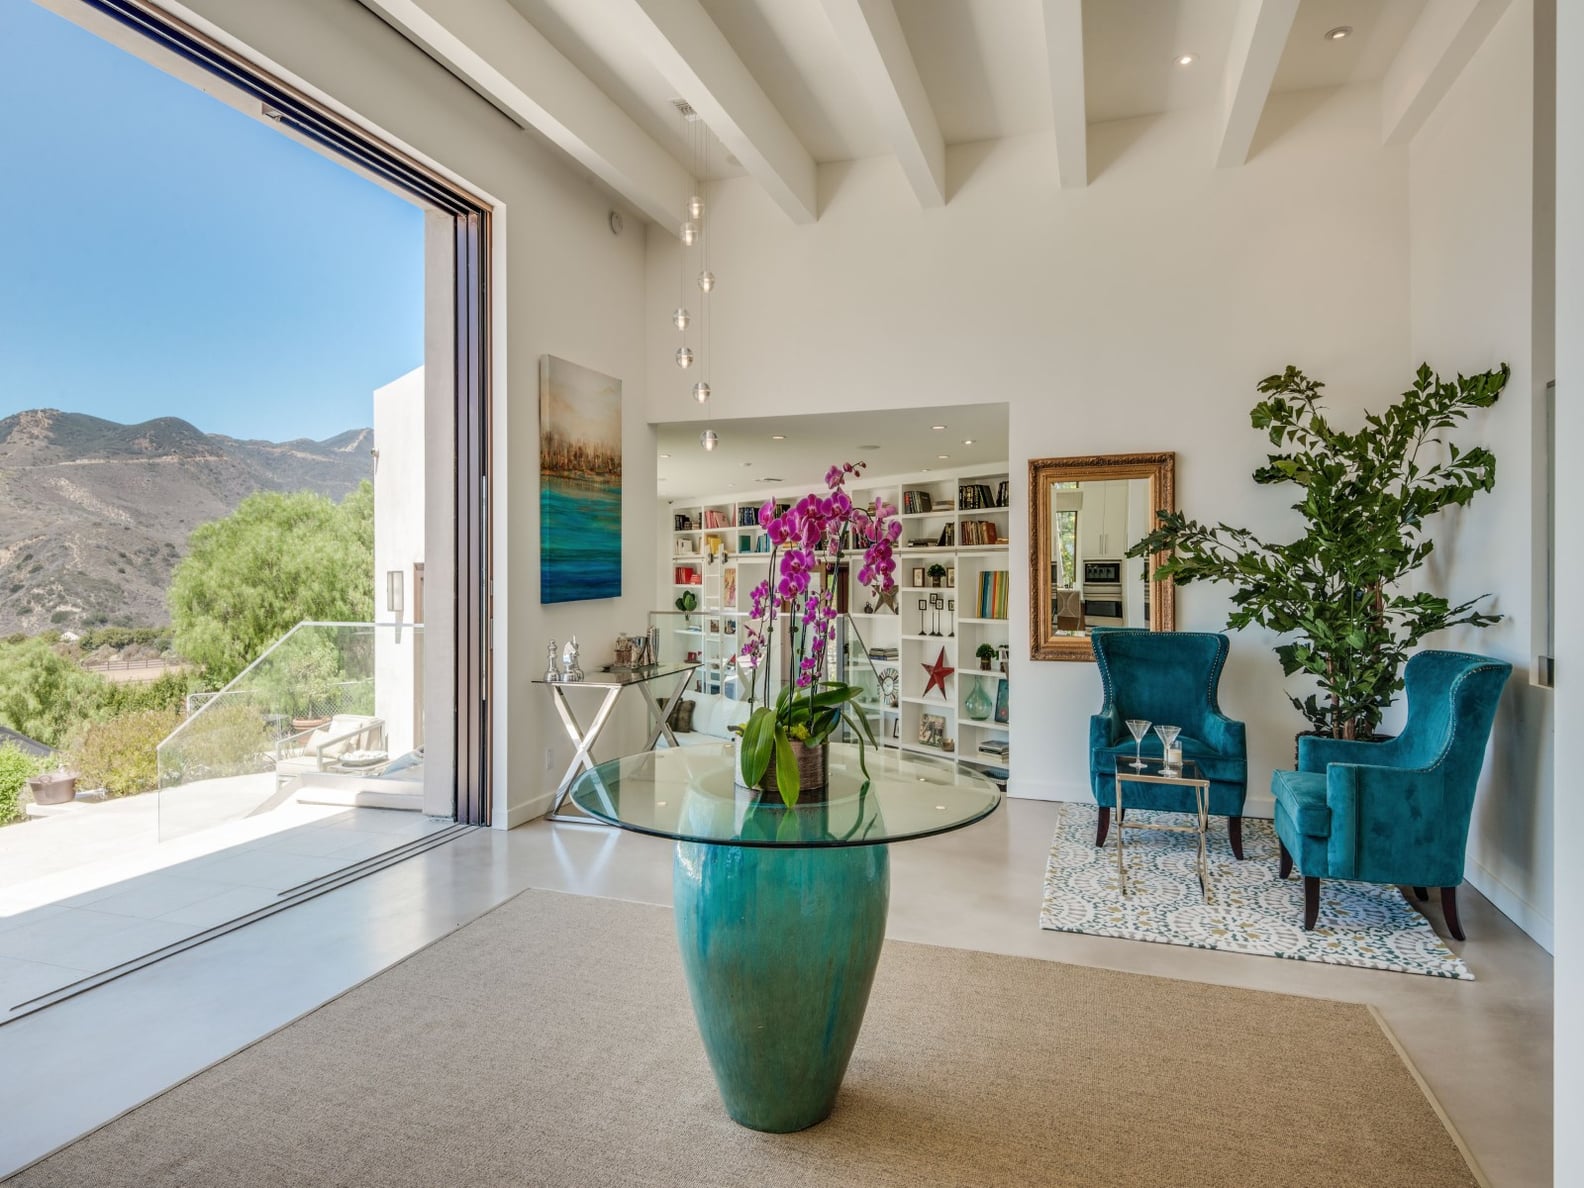 Chris Hemsworth and Elsa Pataky Buy Malibu Home | POPSUGAR Home